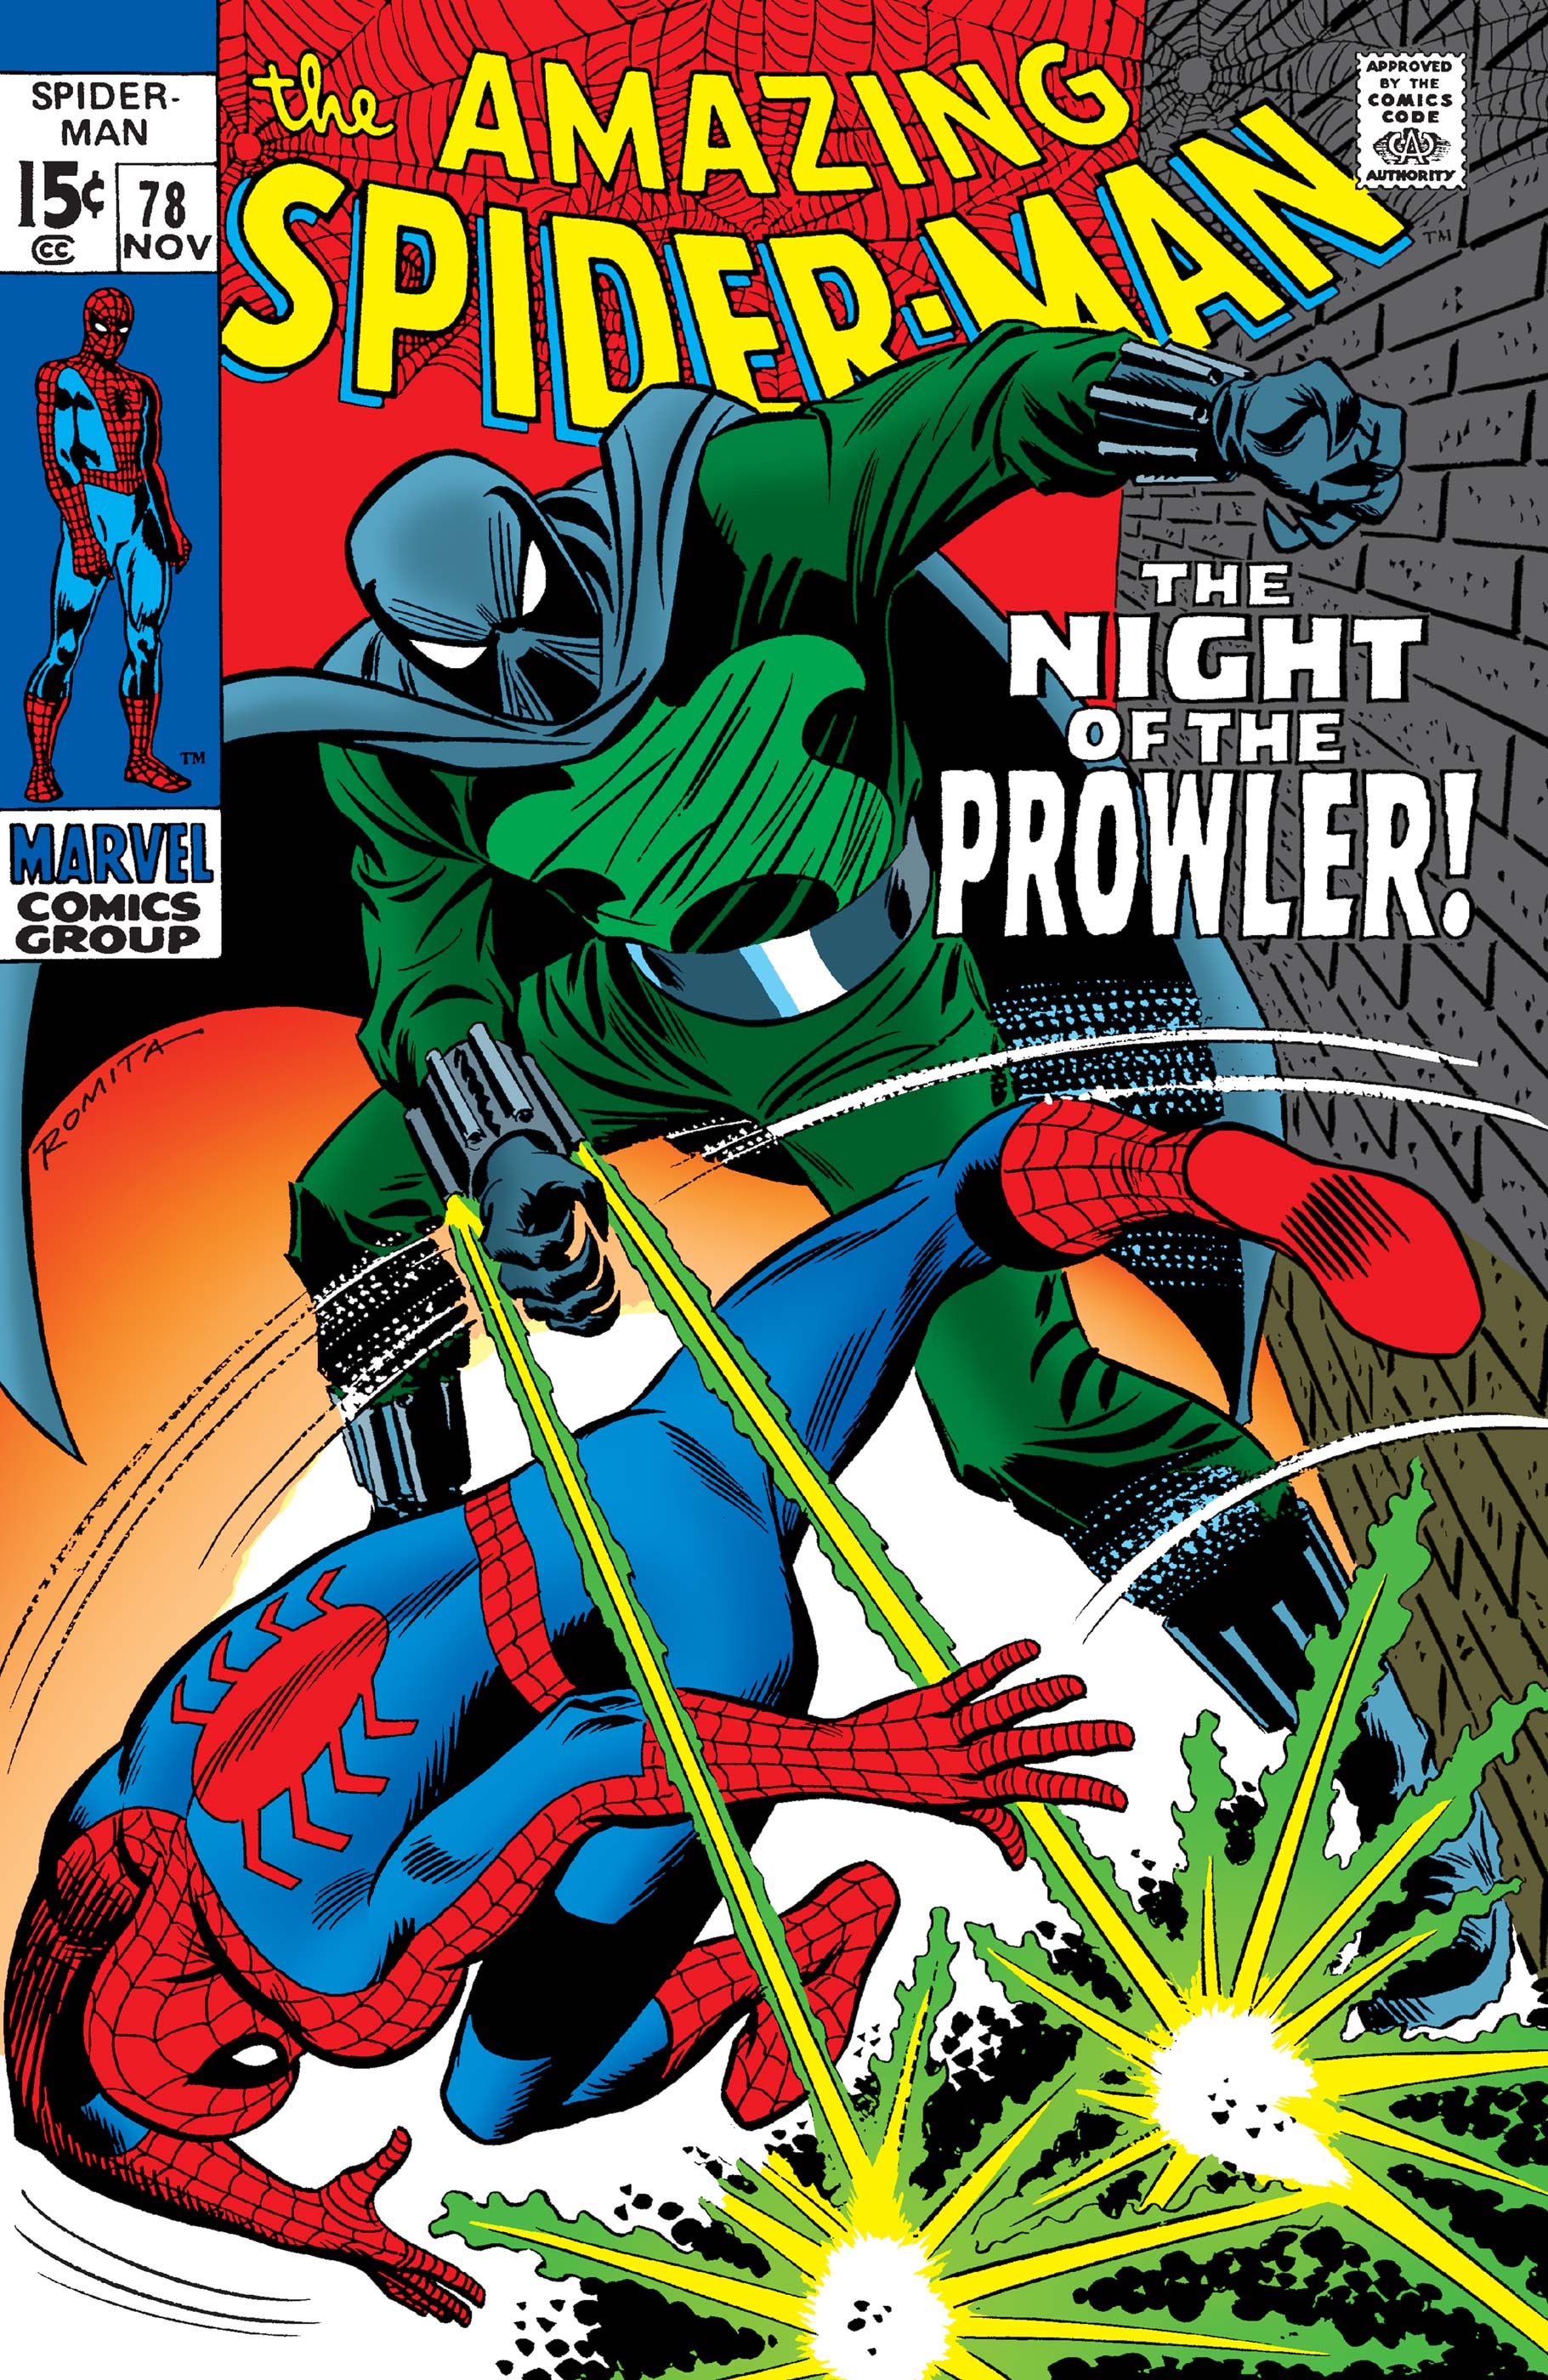 The Amazing Spider-Man (1963) #78